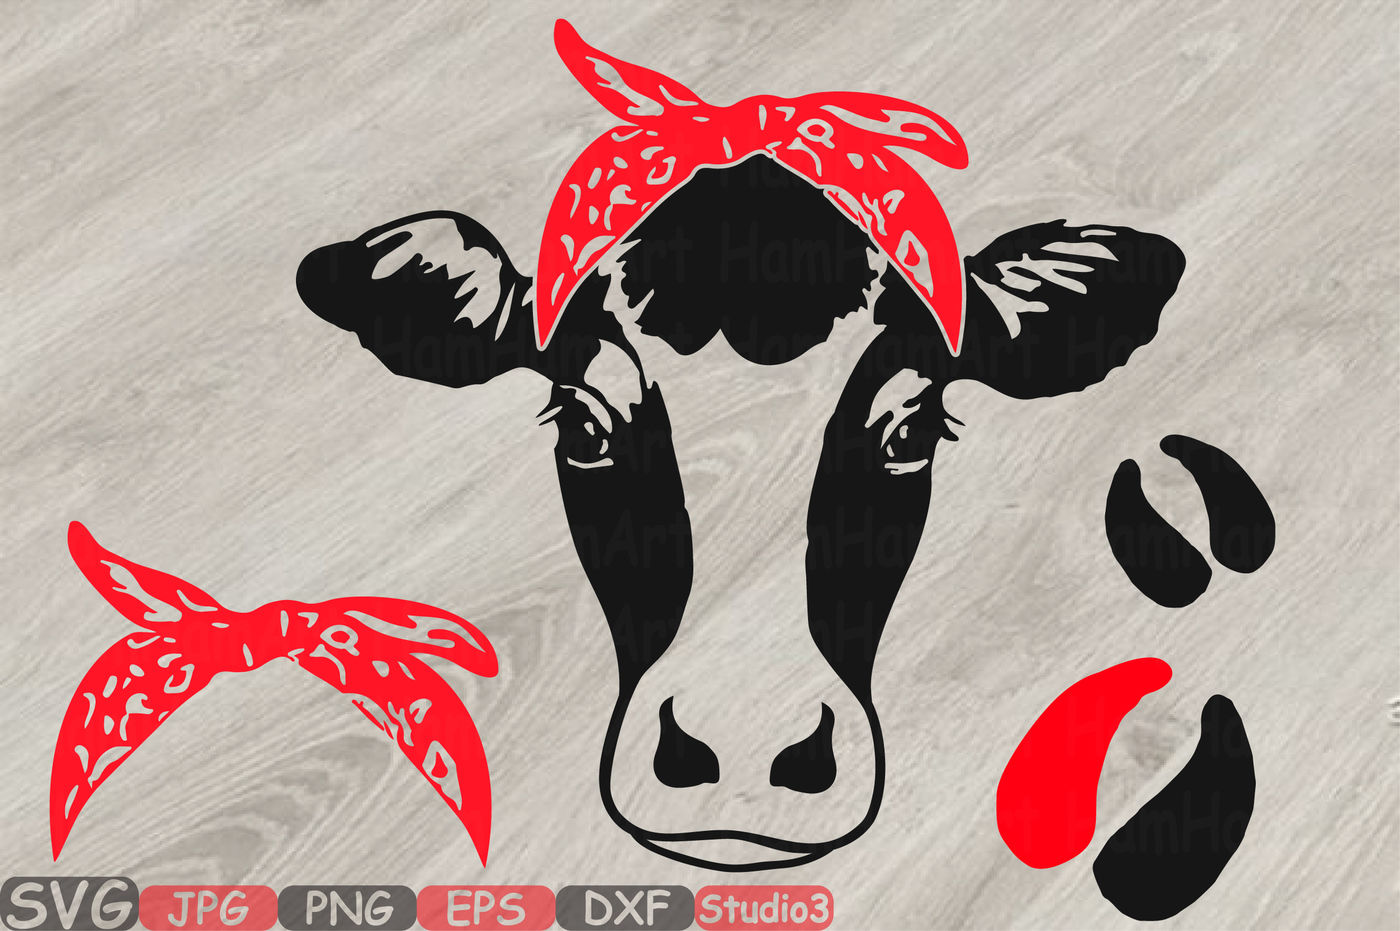 Cow Head whit Bandana Silhouette SVG cowboy western Farm Milk 814S By